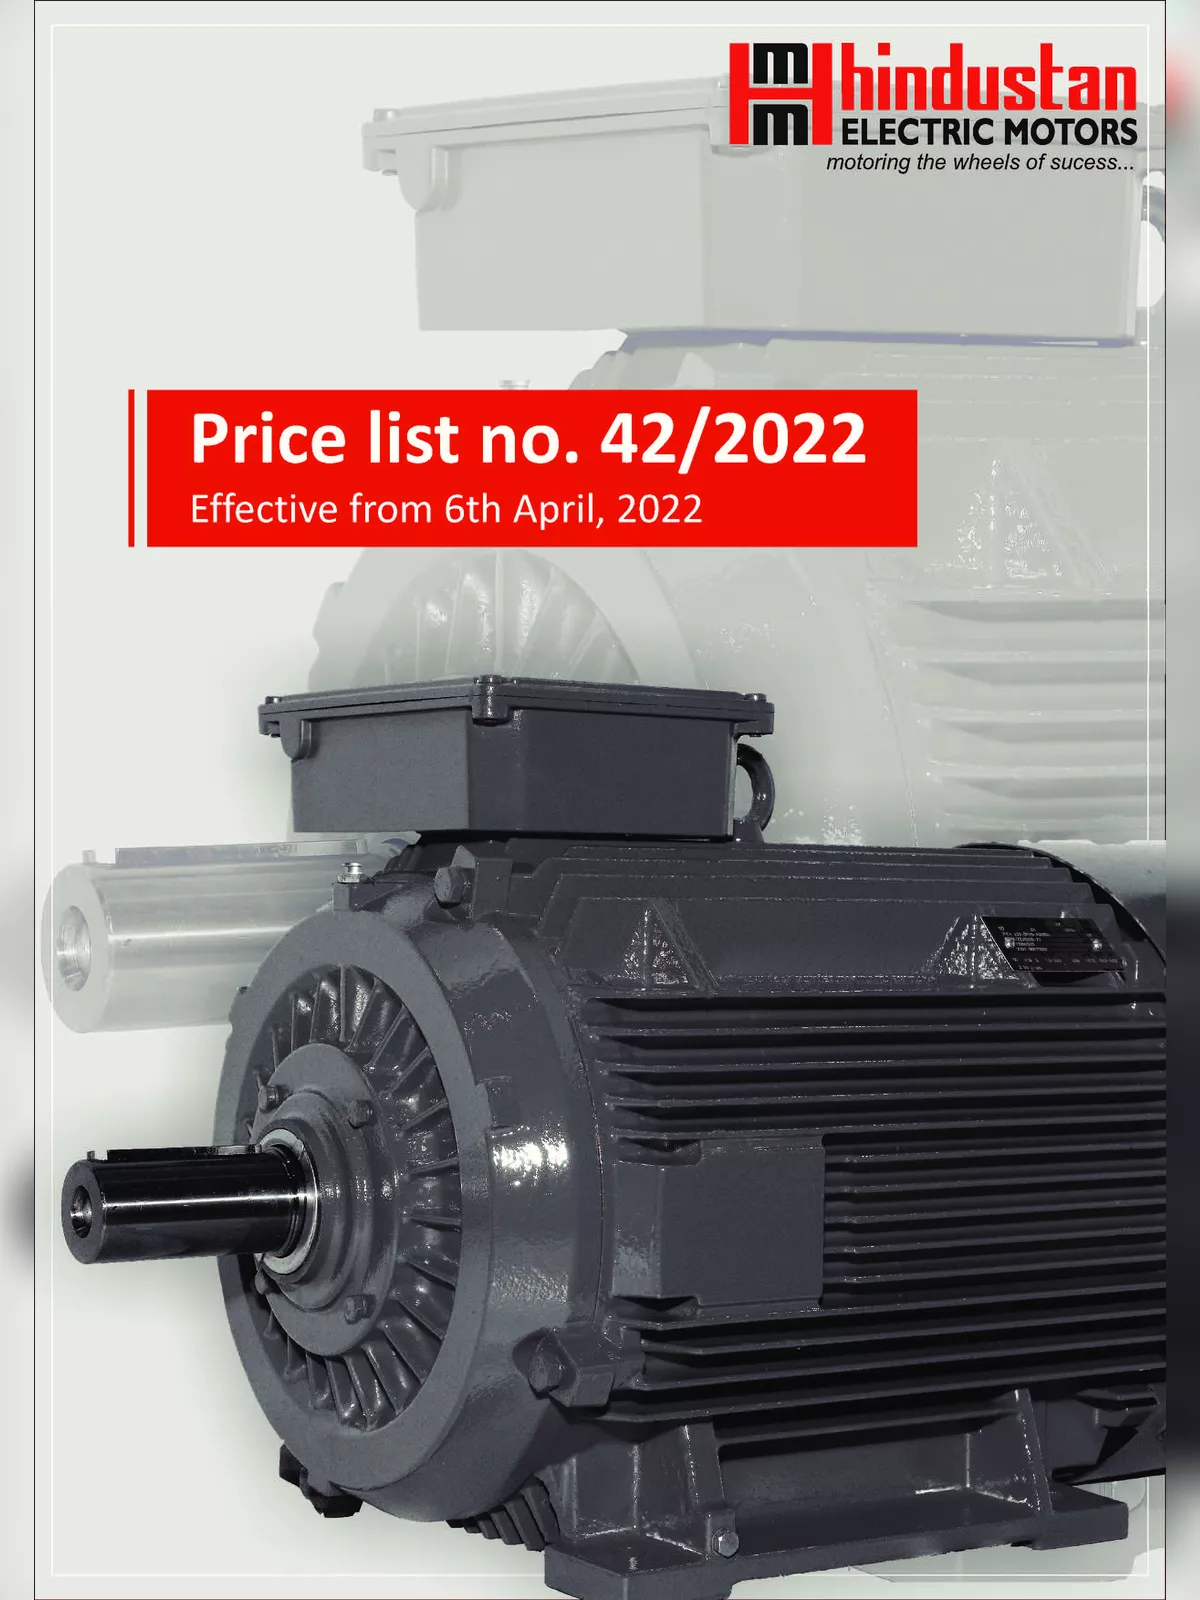 Hindustan Electric Motors Price List 2024